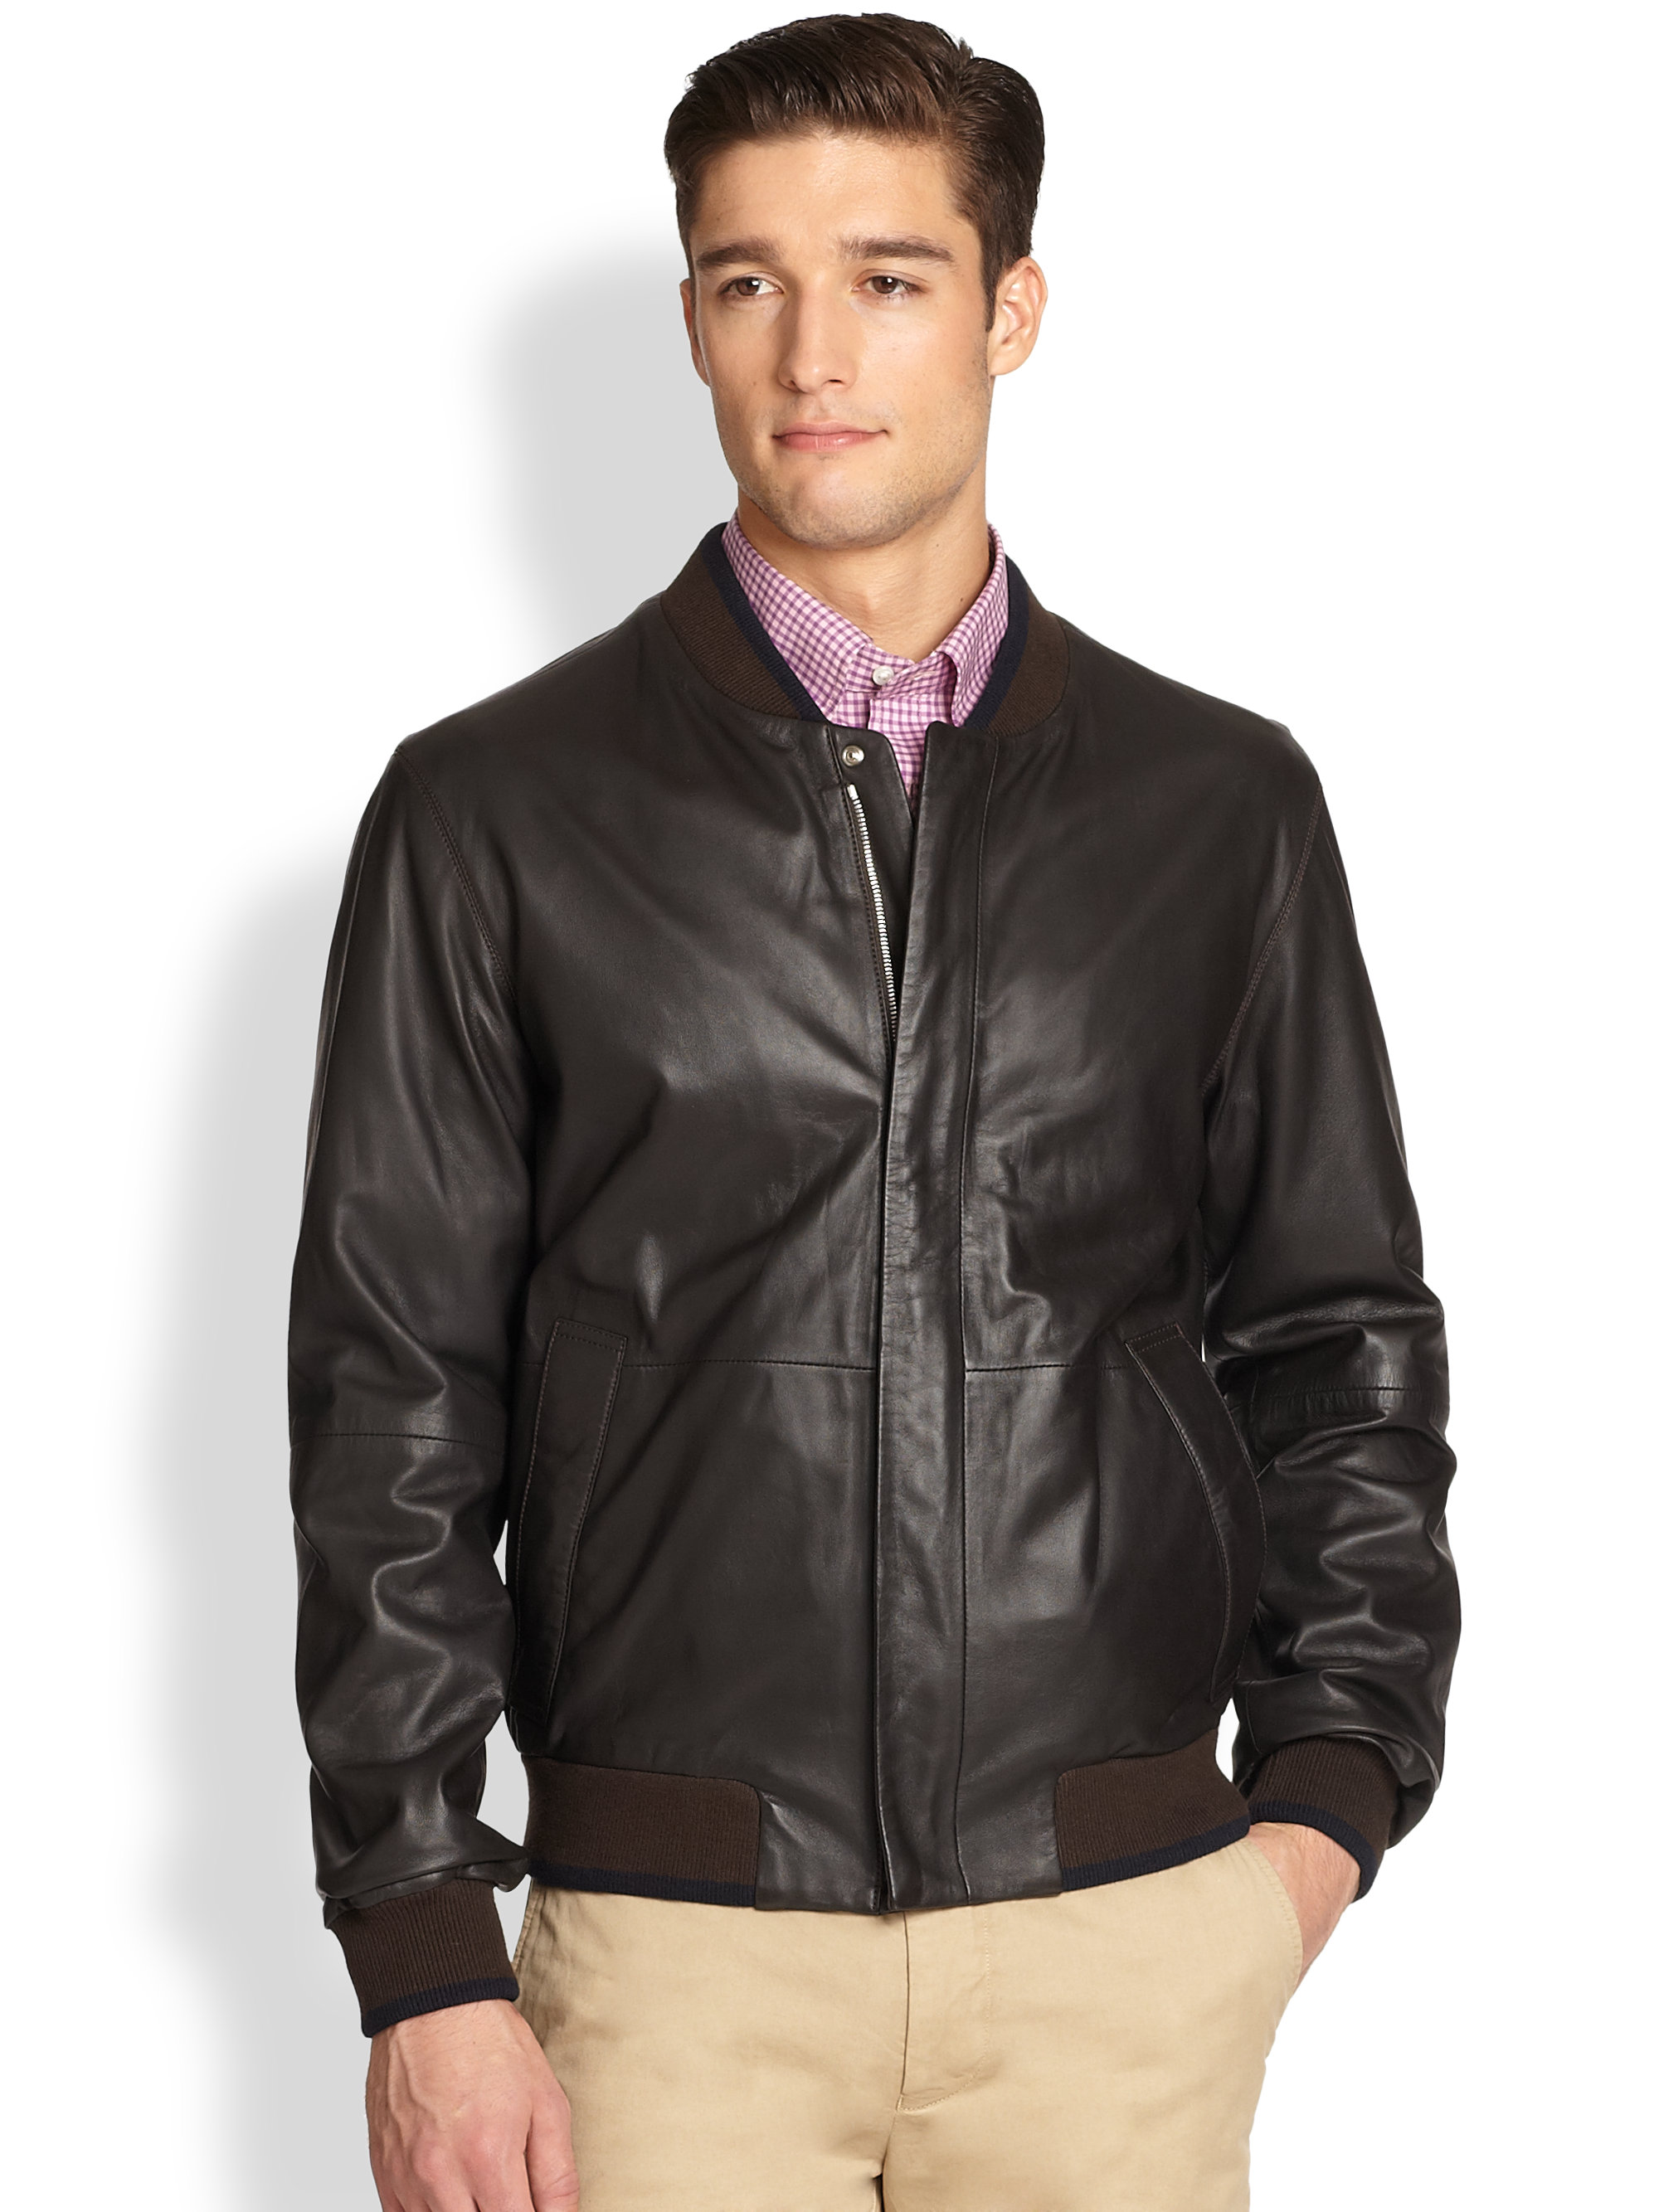 Inspirasi Wear Aviator Leather Jacket